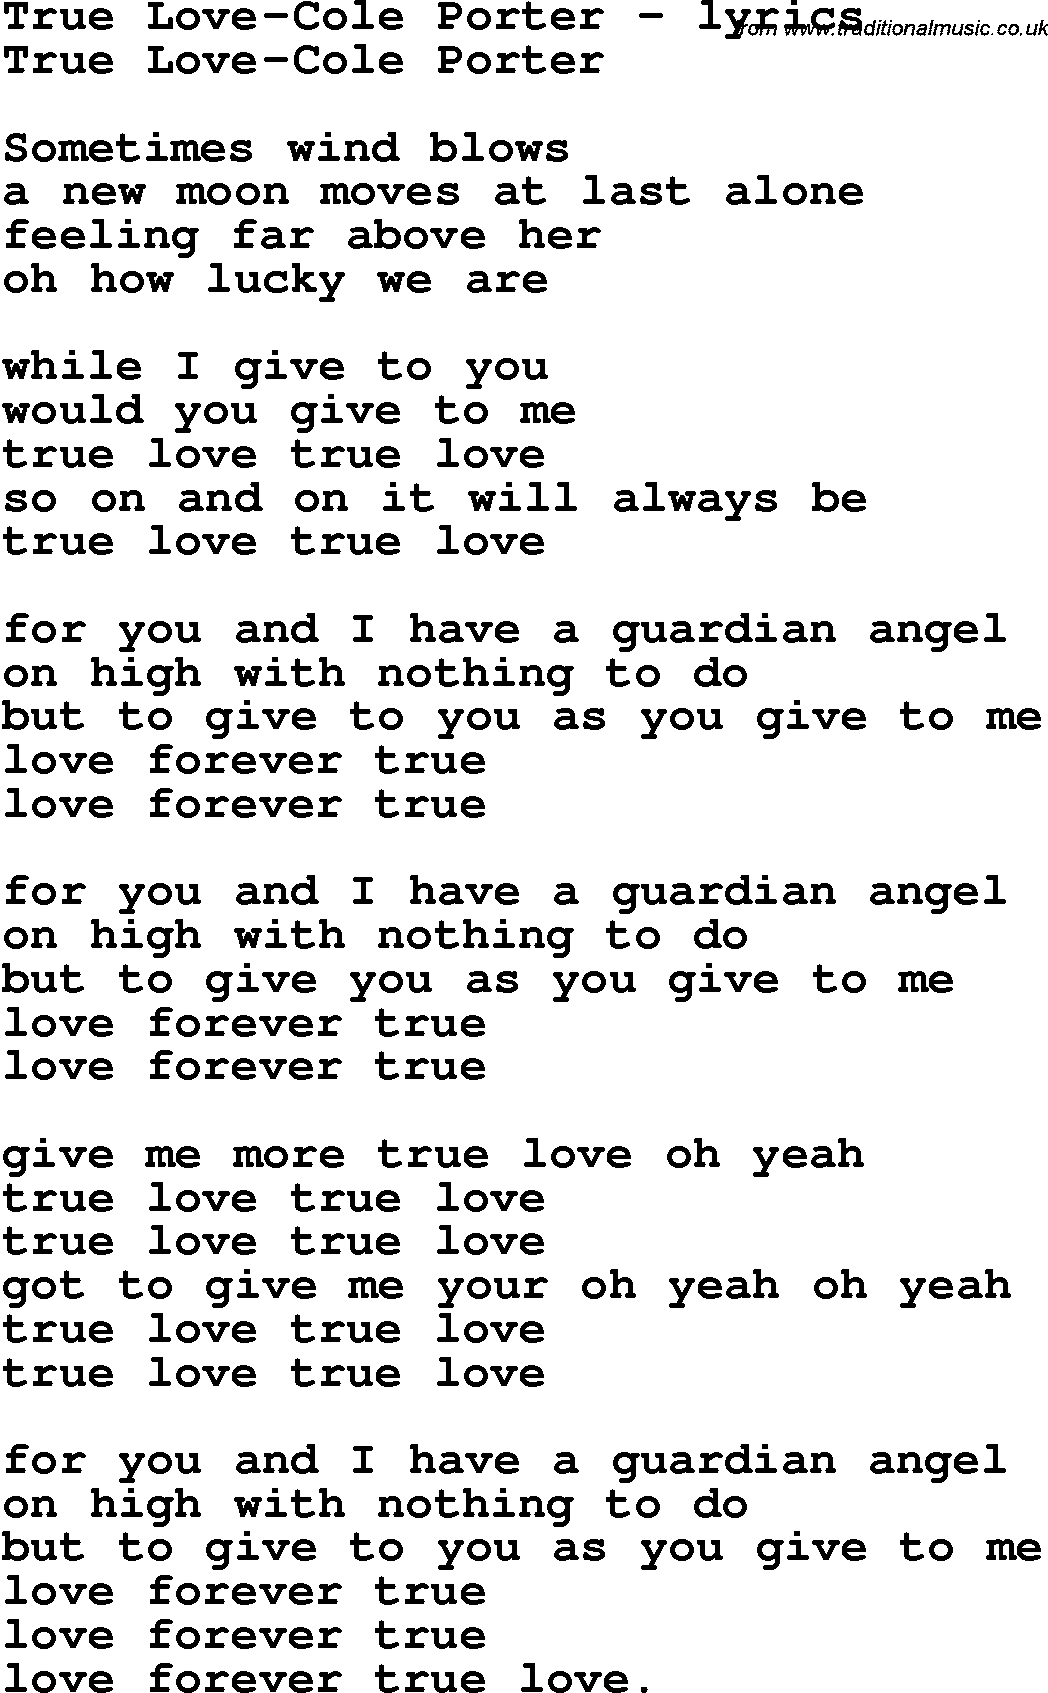 Love Song Lyrics for: True Love-Cole Porter